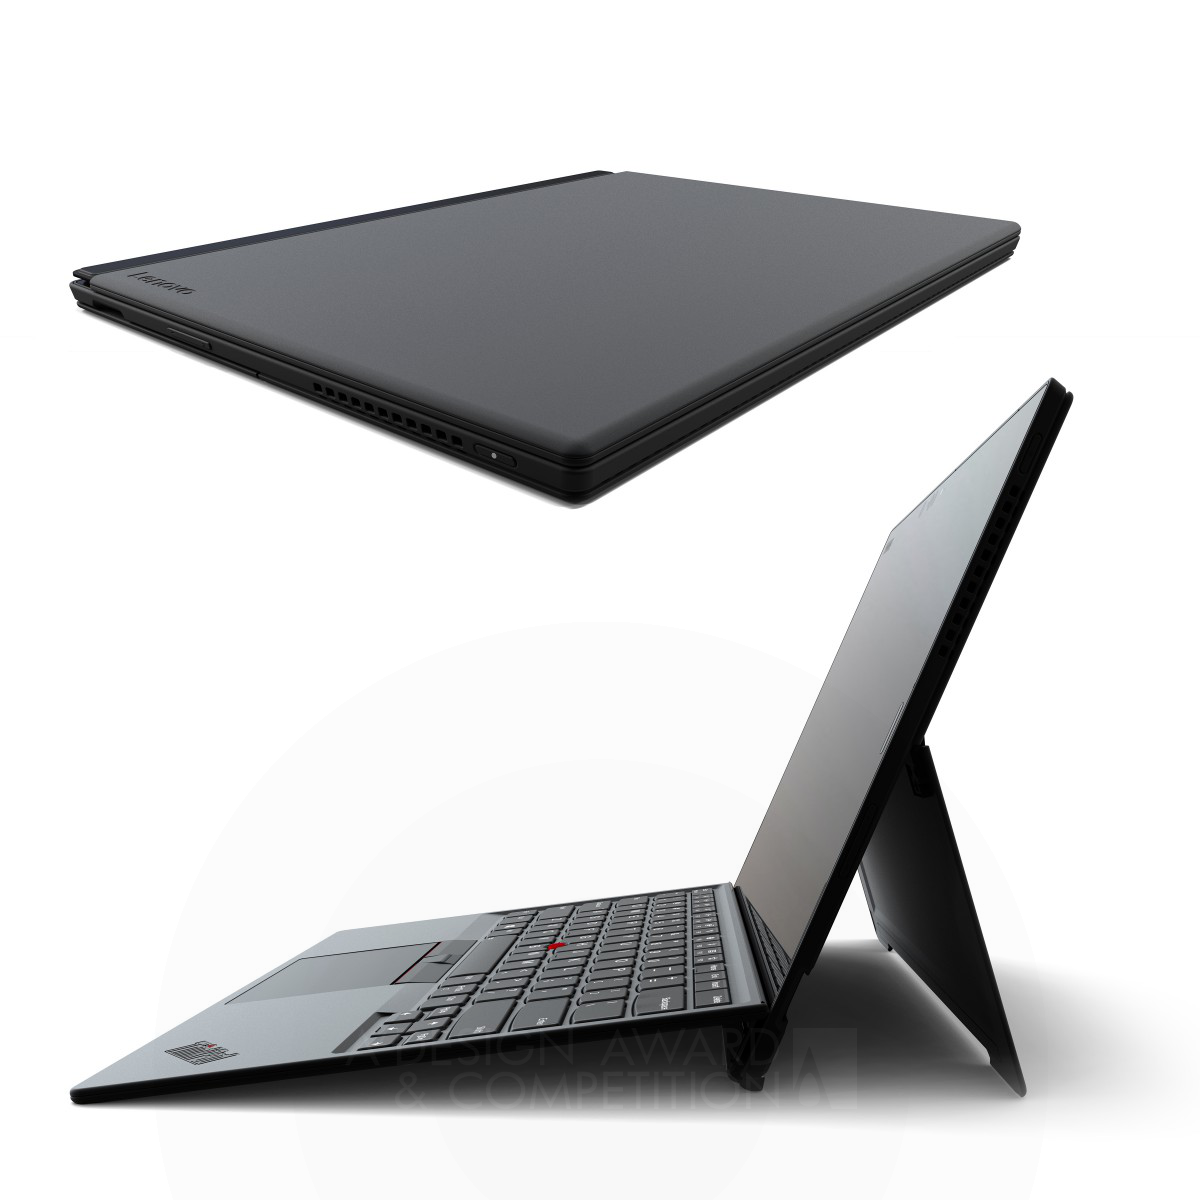 ThinkPad X1 Tablet Computer